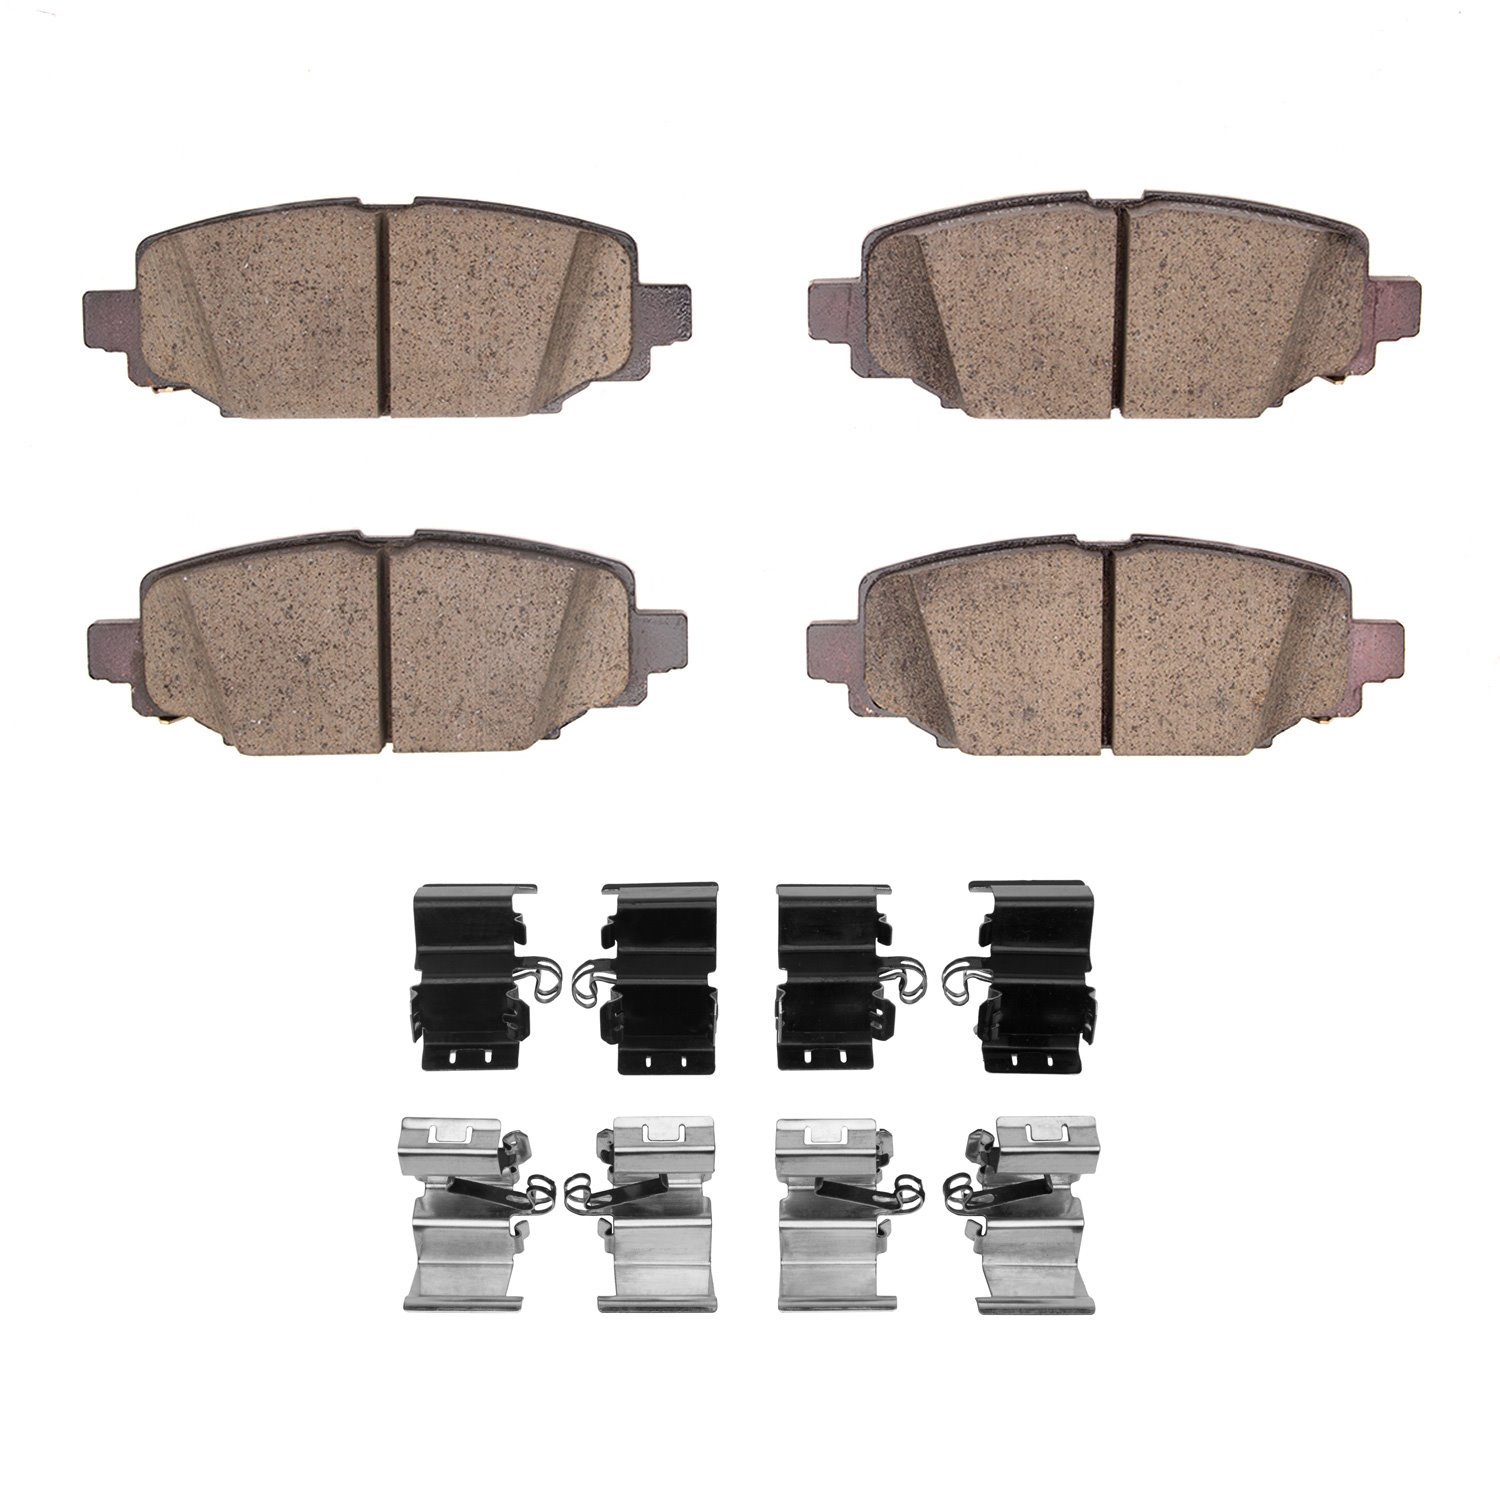 1310-2172-01 3000-Series Ceramic Brake Pads & Hardware Kit, Fits Select Mopar, Position: Rear